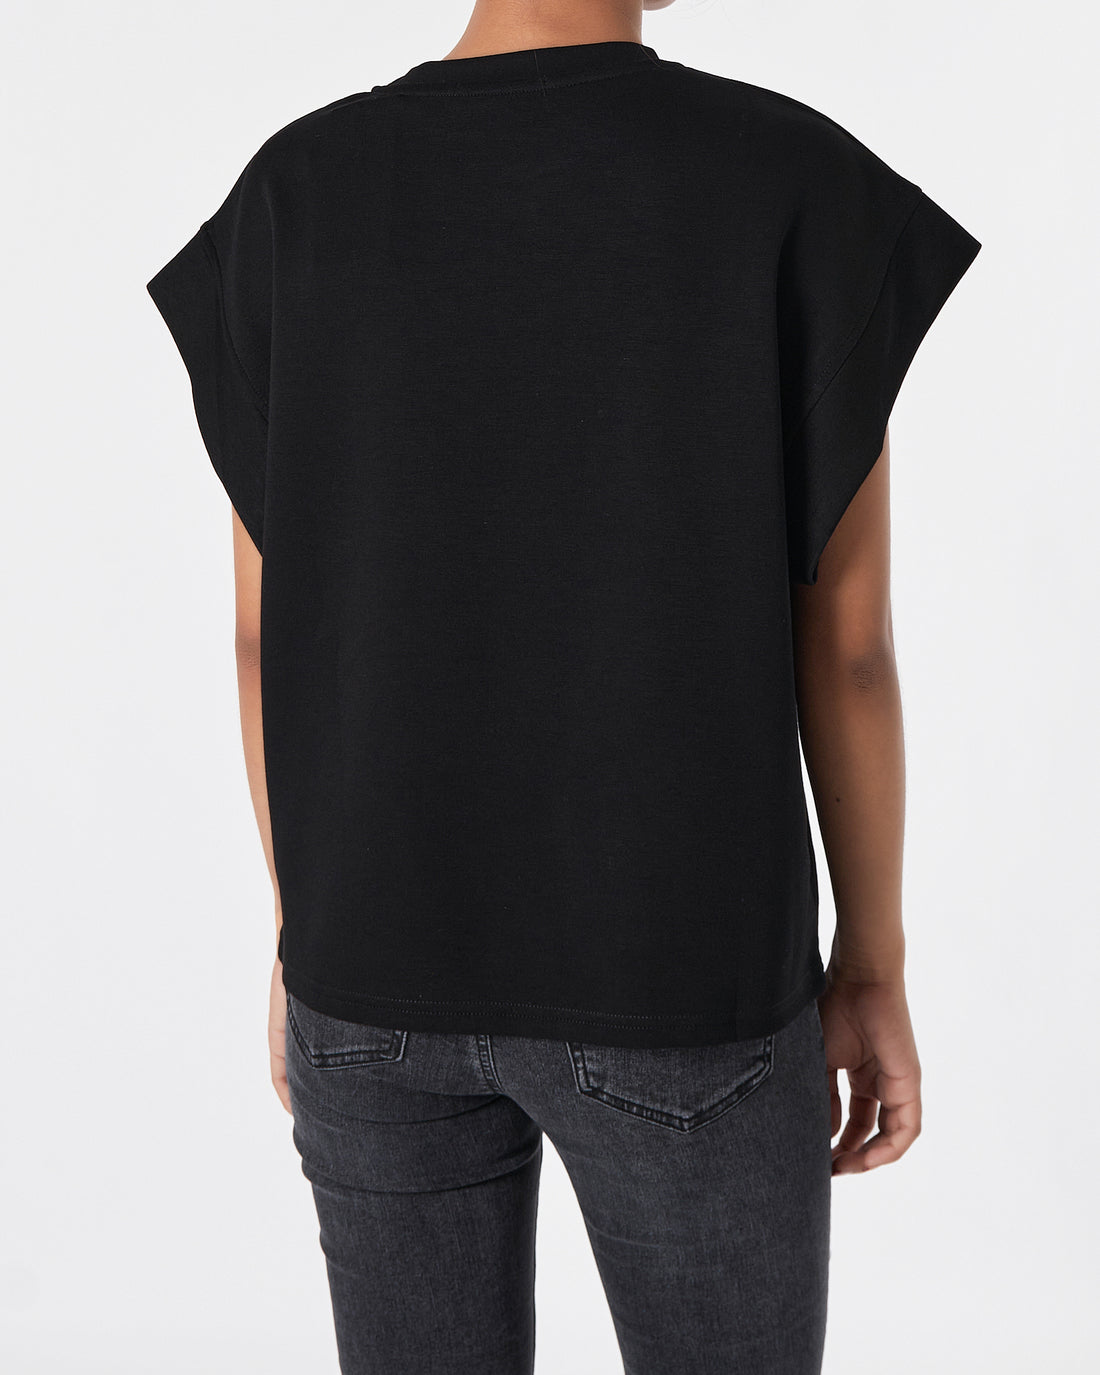 Lady Black  T-Shirt 13.90